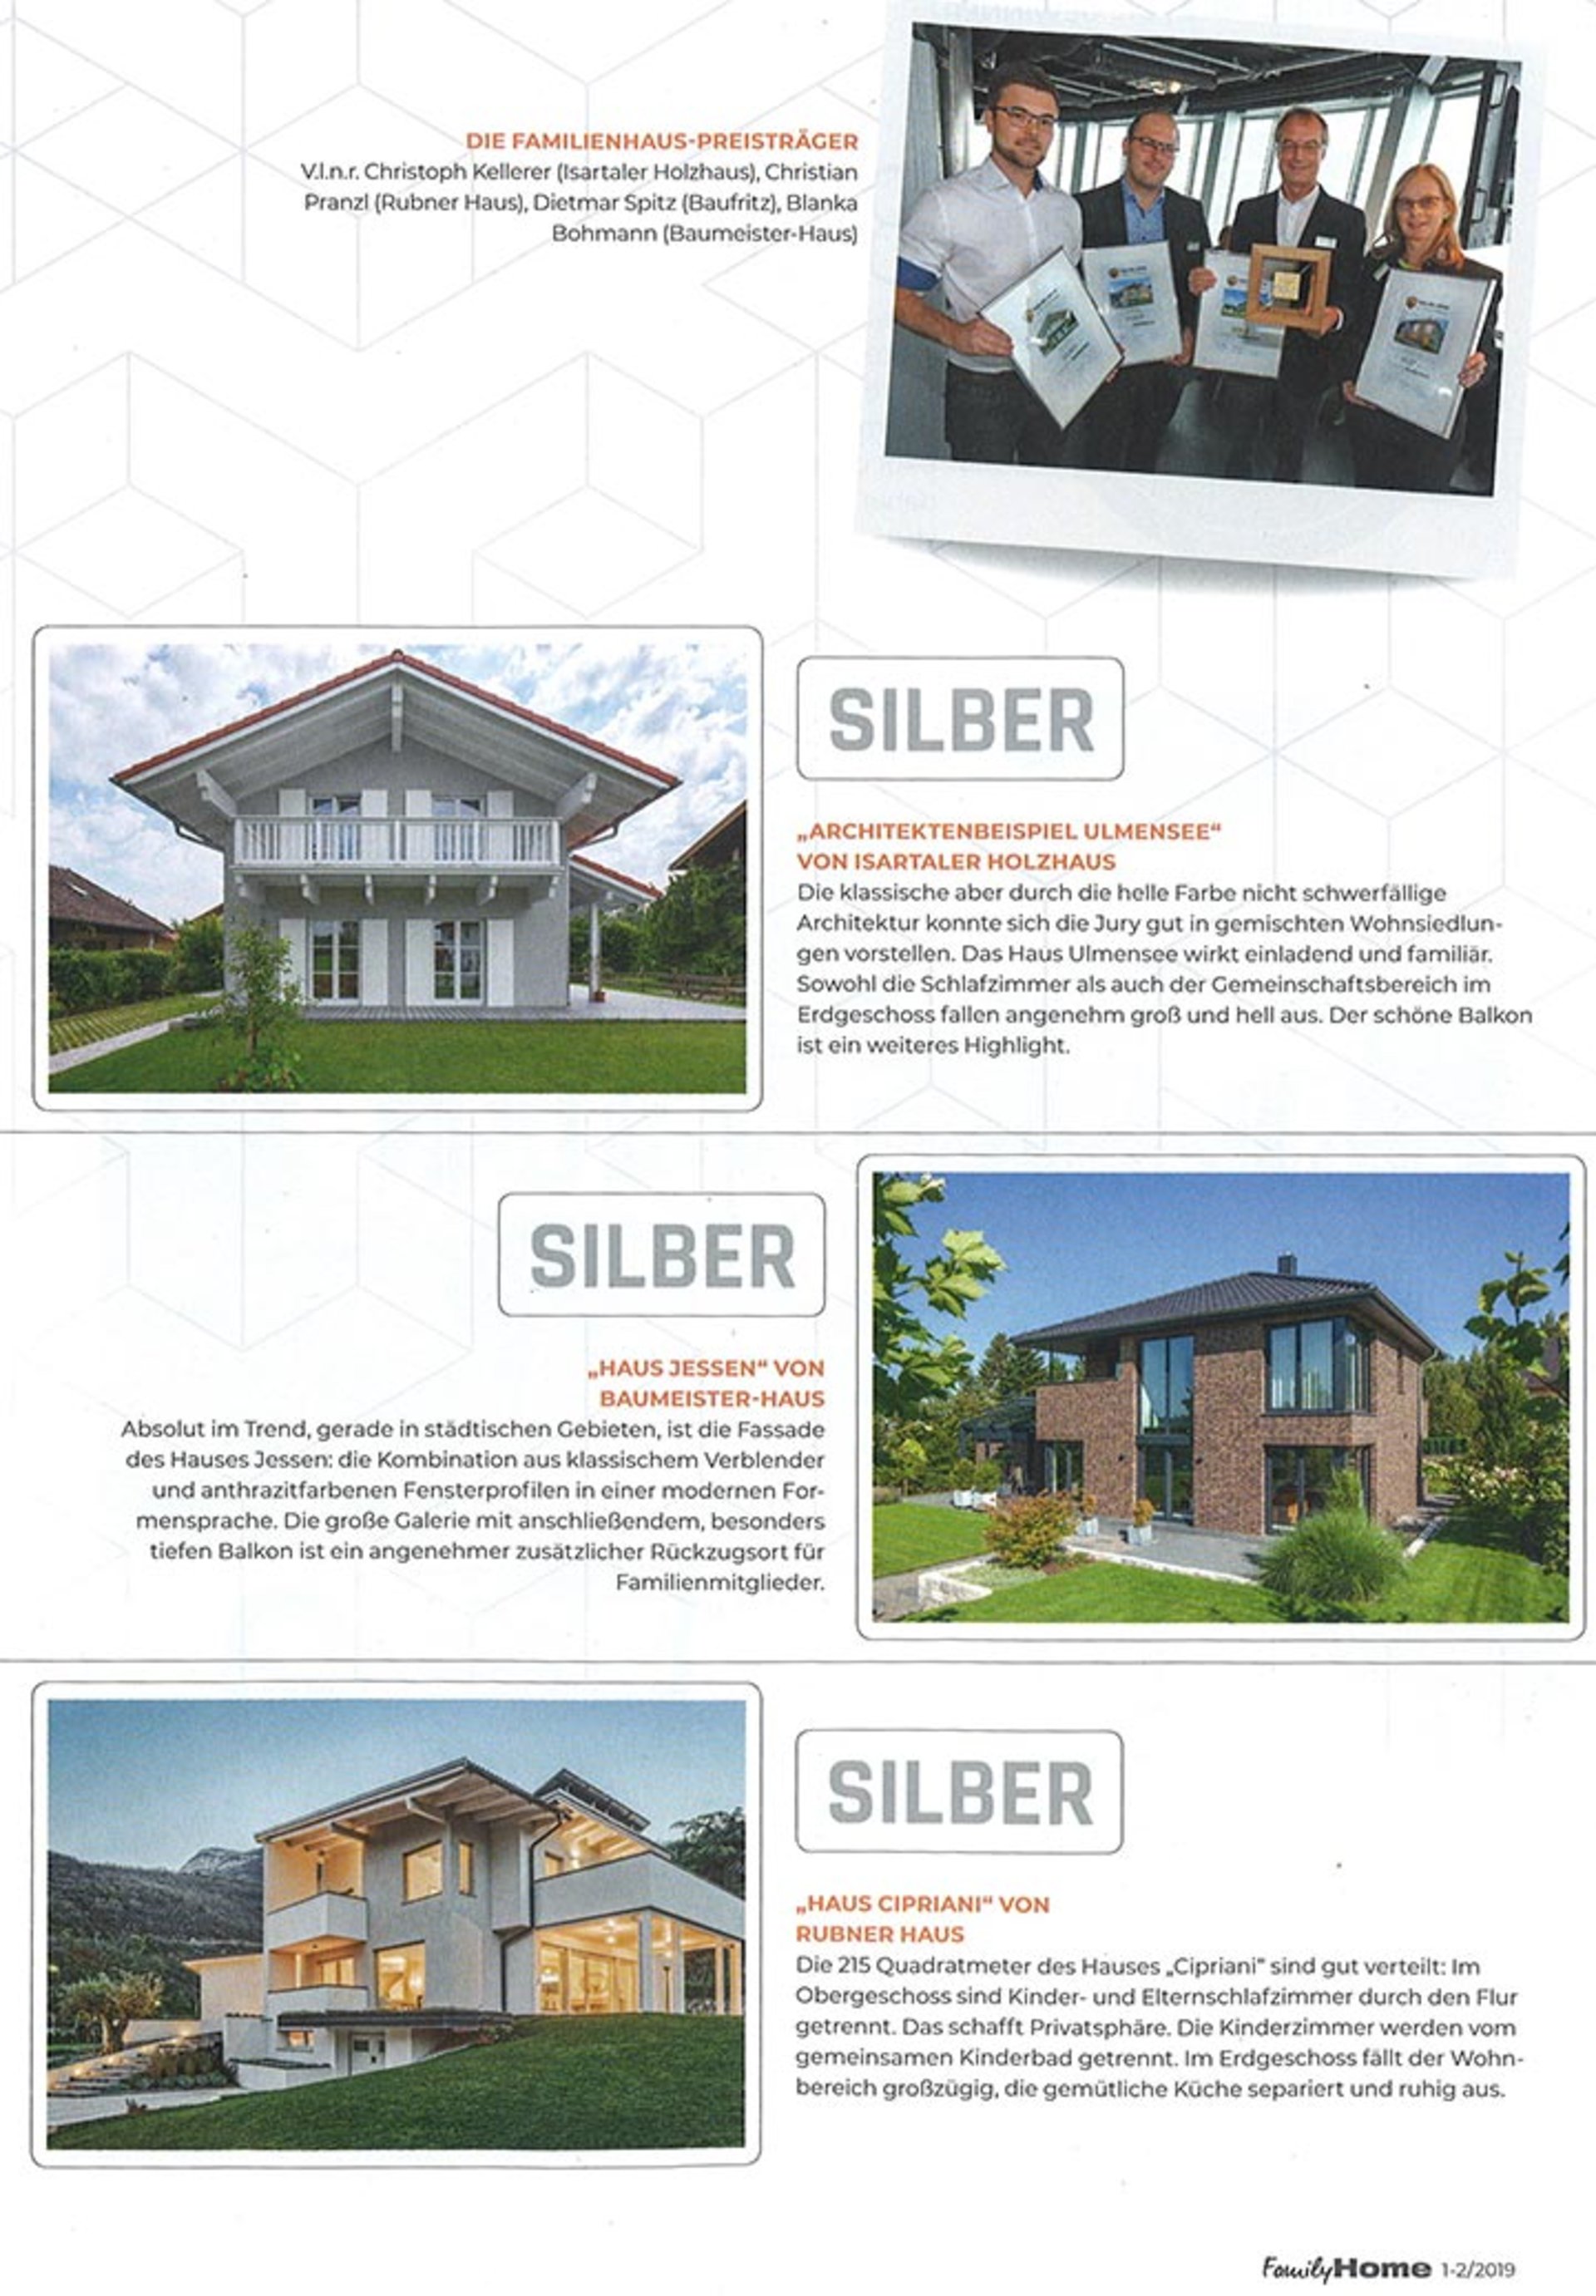 Family Home Jubiläumsausgabe 1-2 2019 Familienhaus Silber Haus Jessen